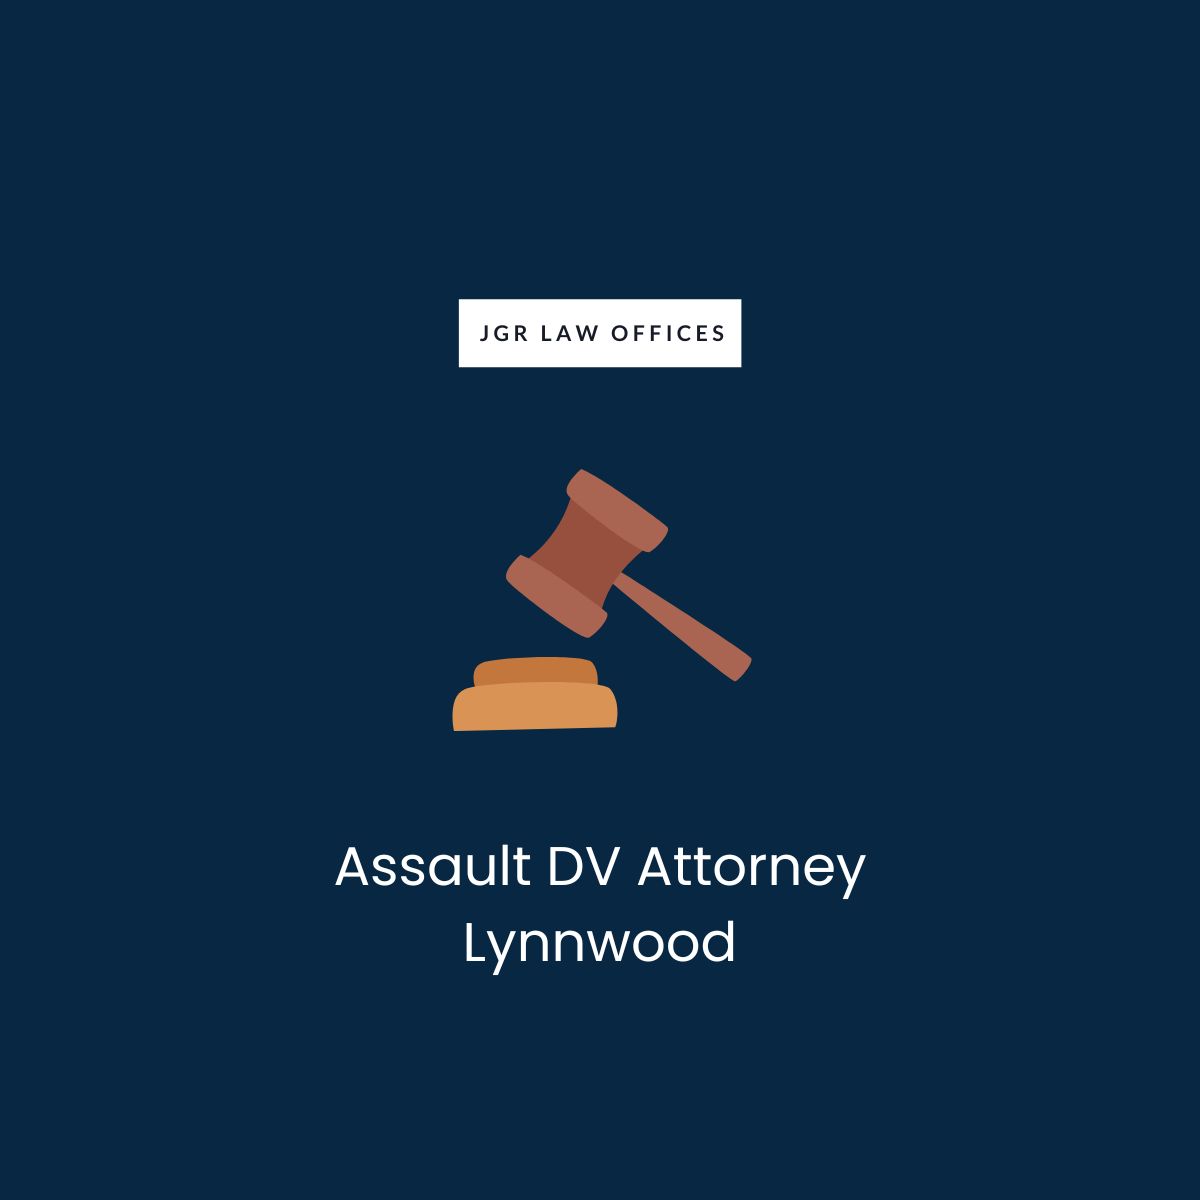 Assault DV Attorney Lynnwood